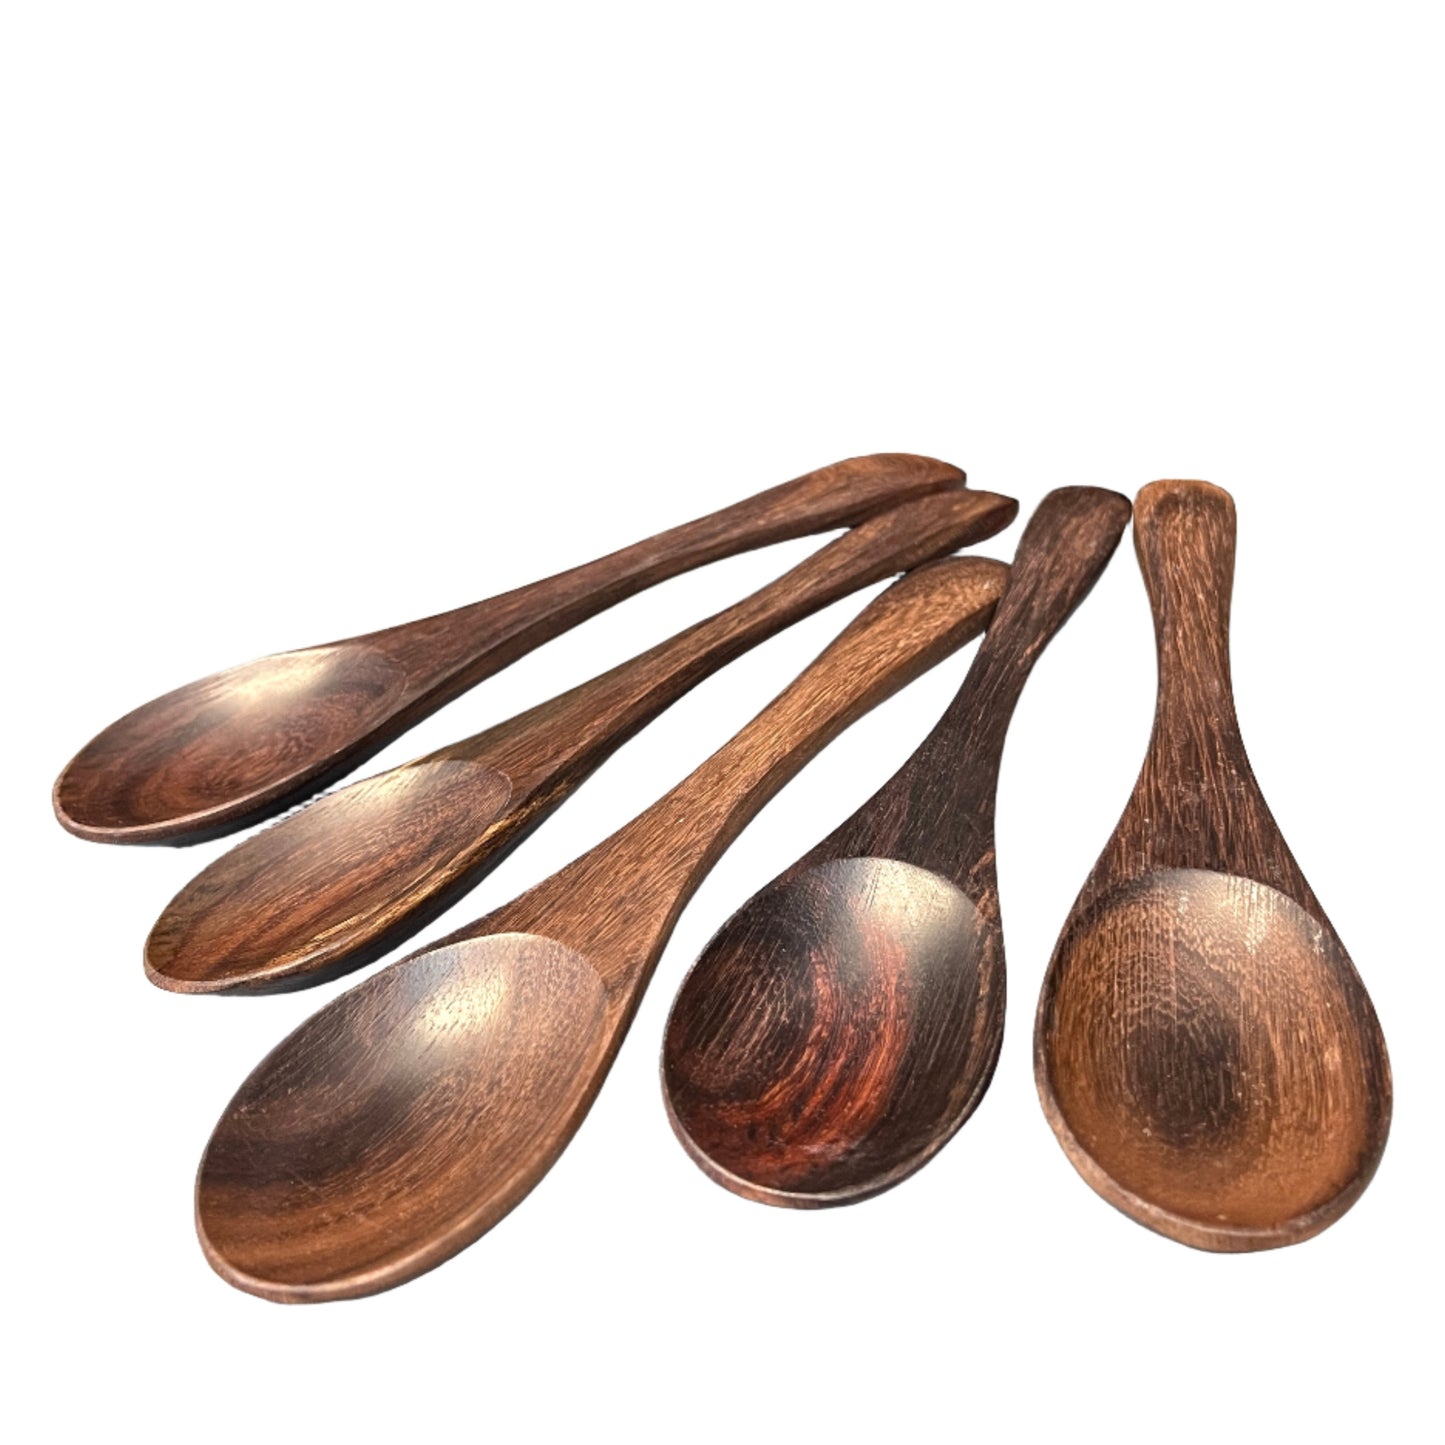 Sono Wood Spoons 6.5" - Set of 5